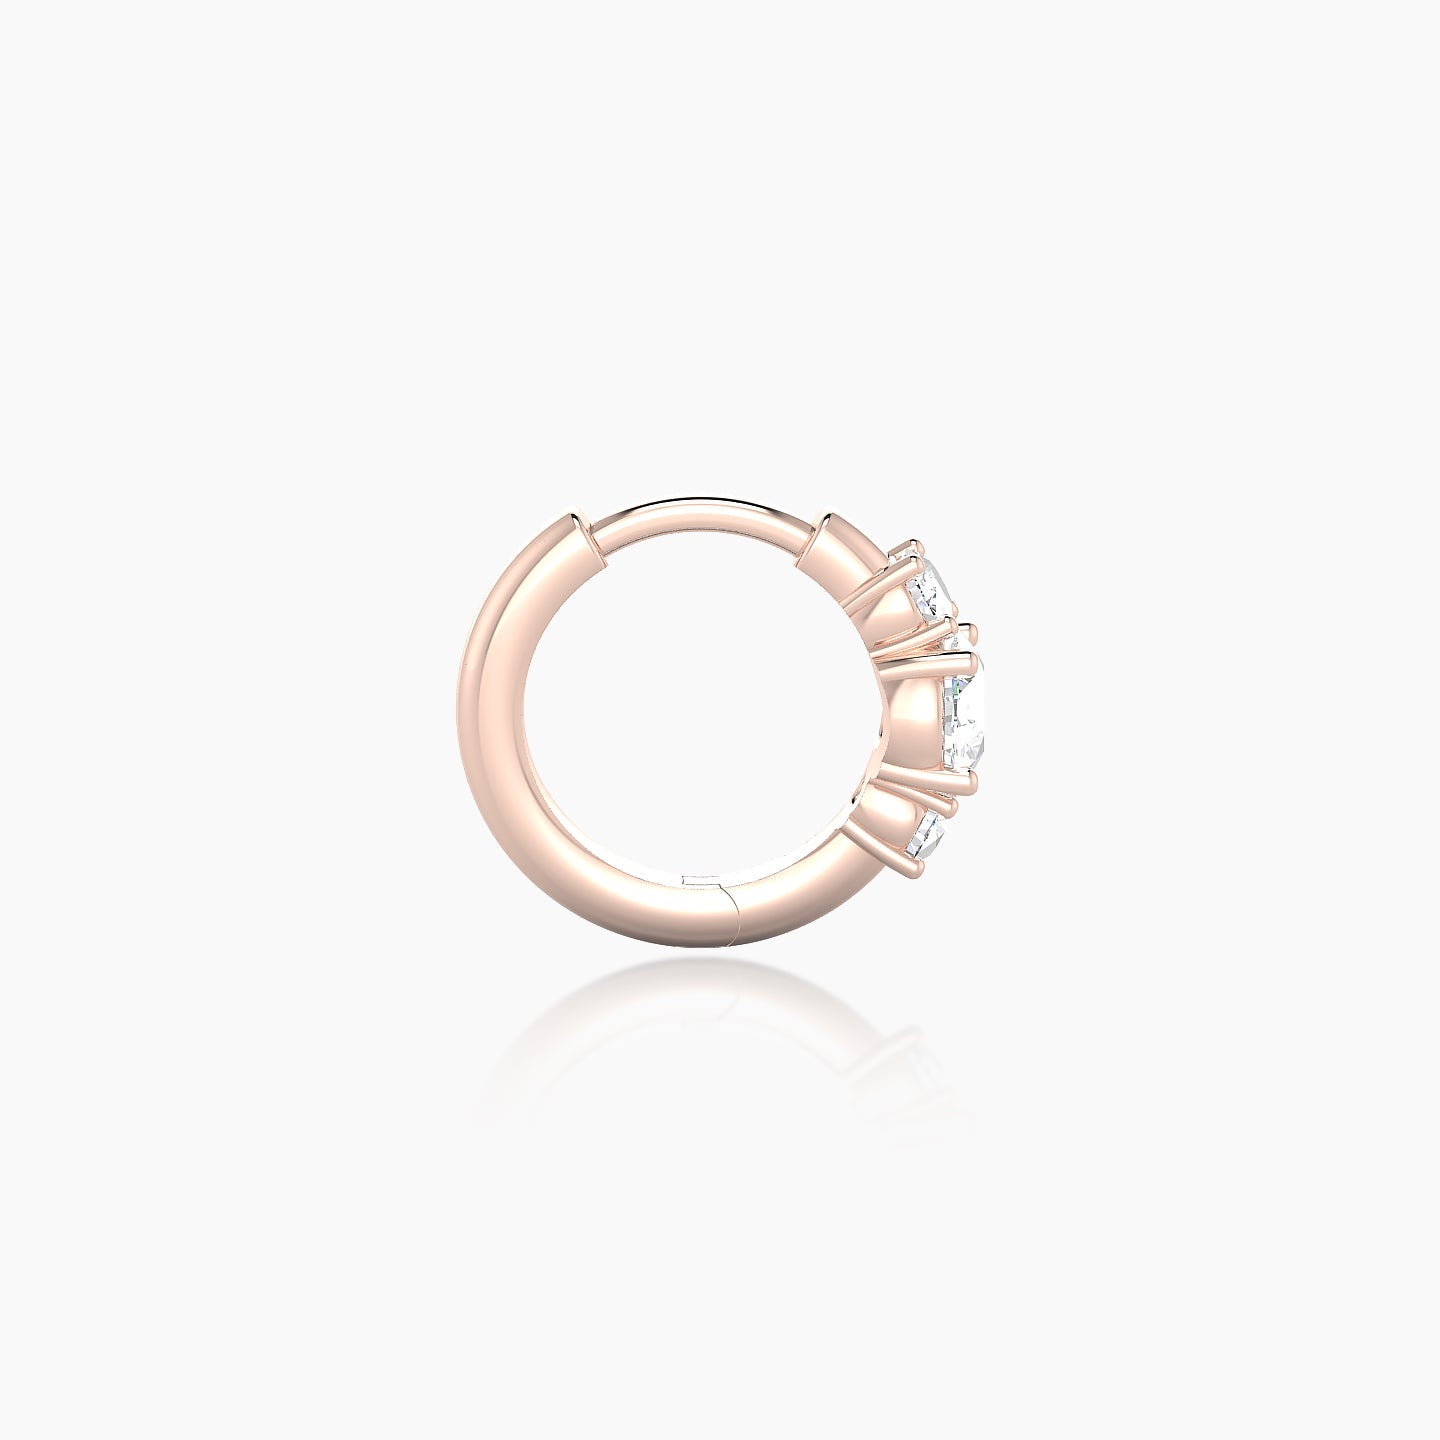 Grace | 18k Rose Gold 6.5 mm Trilogy Round Diamond Nose Ring Piercing